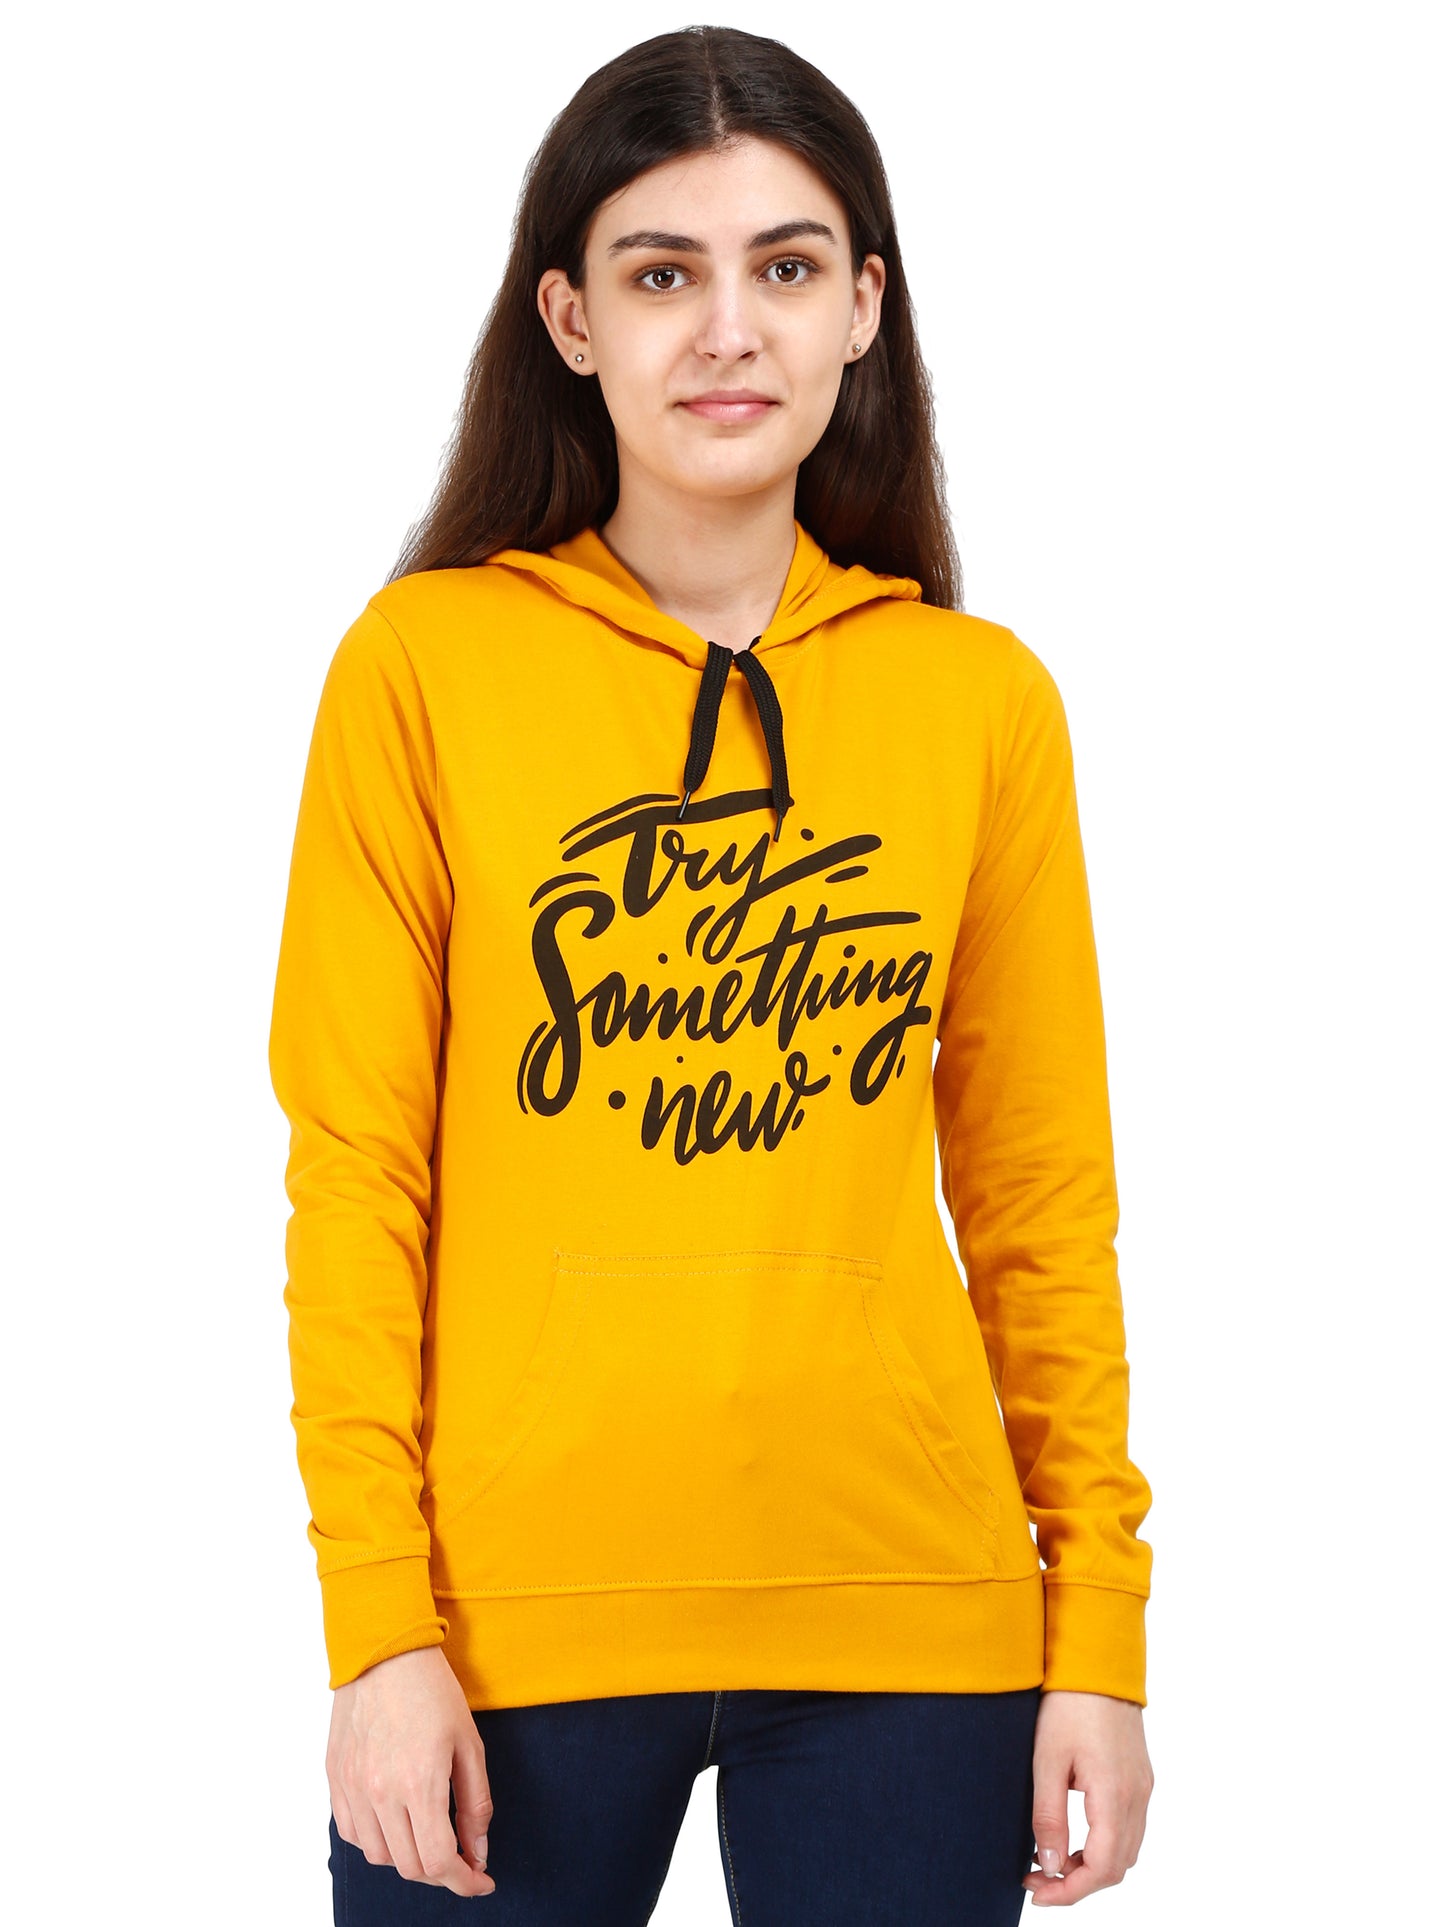 Women's Cotton Printed Full Sleeve Mustard Yellow Color Sweatshirt/Hoodies